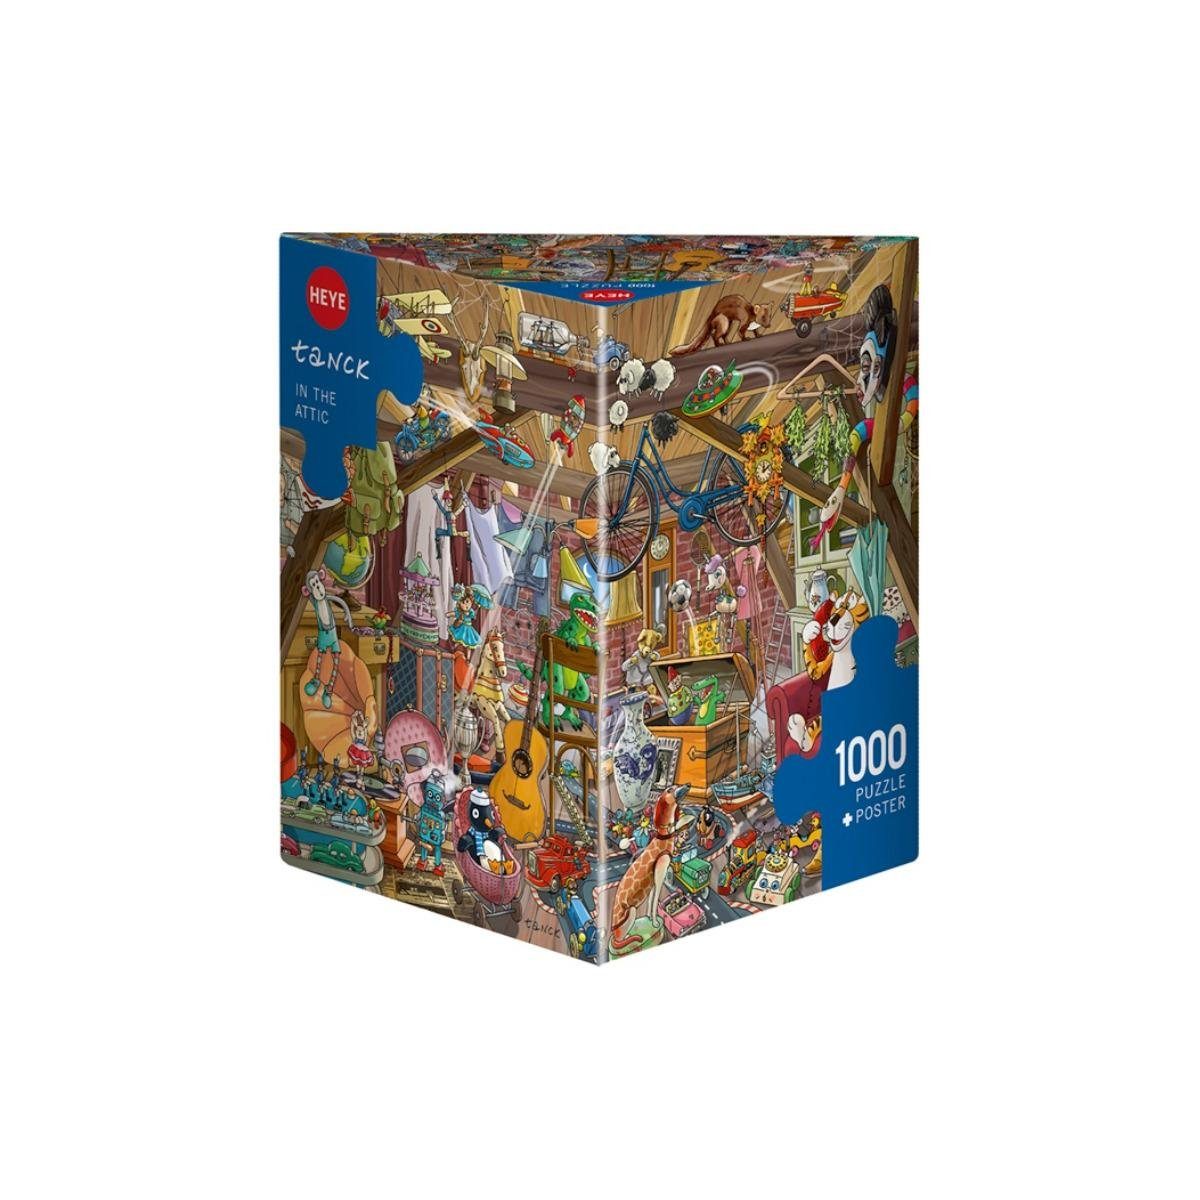 HEYE Puzzle 298852 - In The Attic, Cartoon im Dreieck, 1000 Teile -..., 1000 Puzzleteile